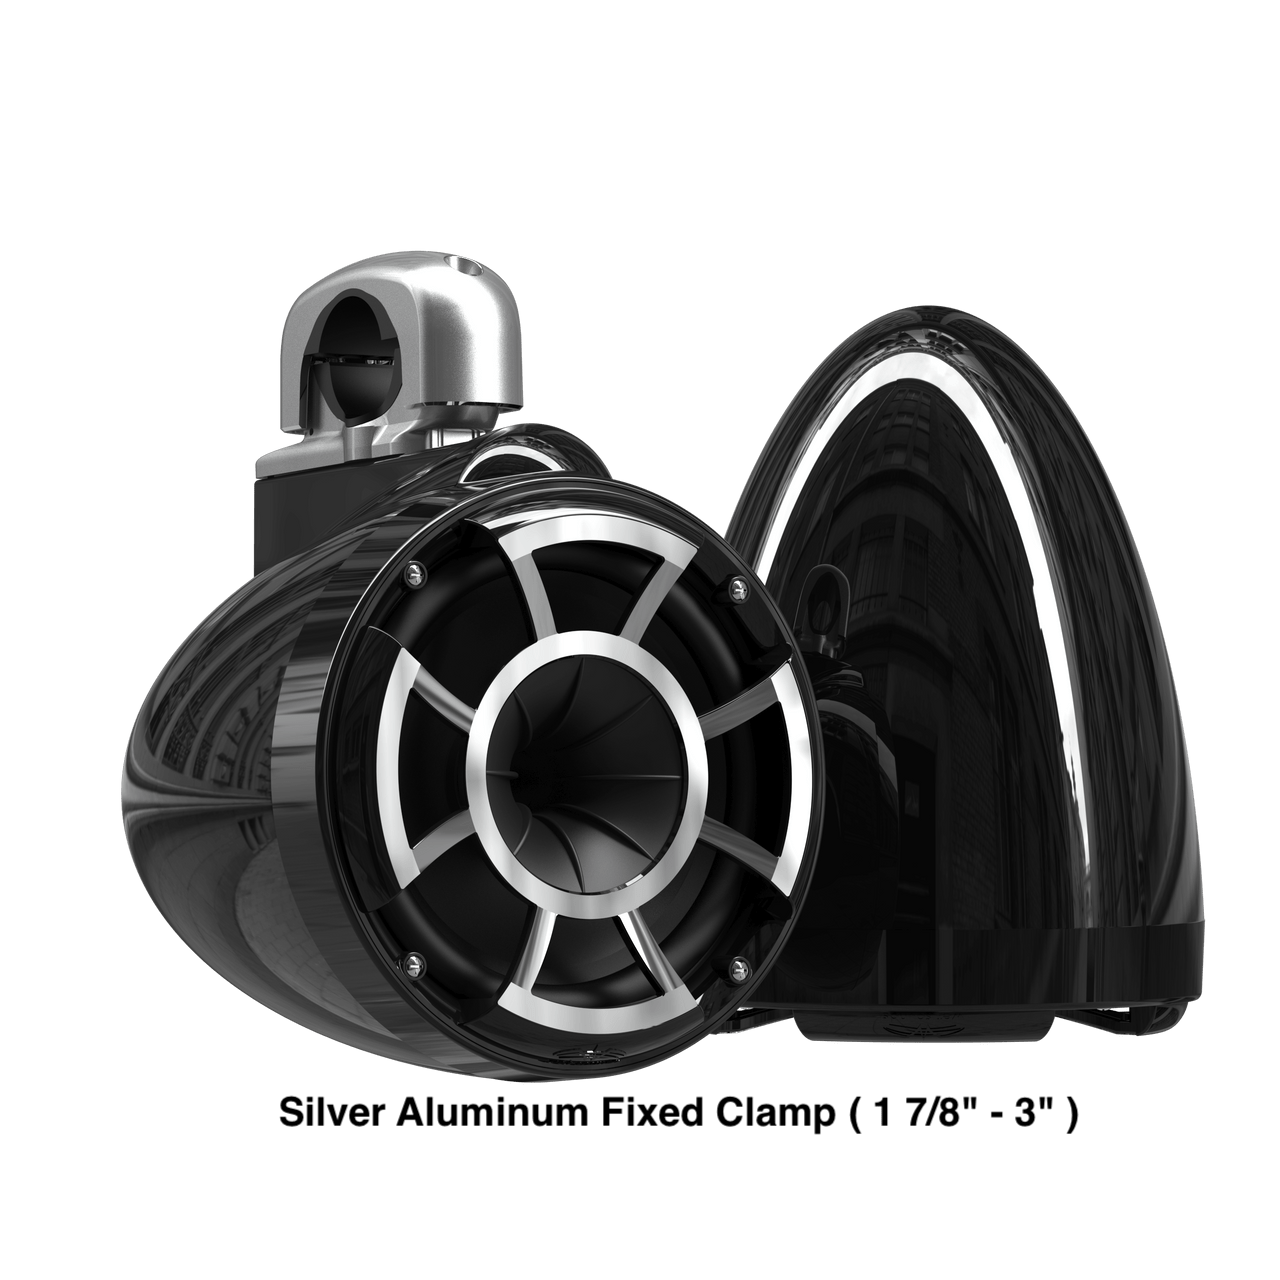 Wet Sounds Boat Wake Tower Speakers Silver Aluminum Fixed Clamp ( 1 7/8" - 3" ) Wet Sounds REV10™ Black V2 | Revolution Series 10" Black Tower Speakers